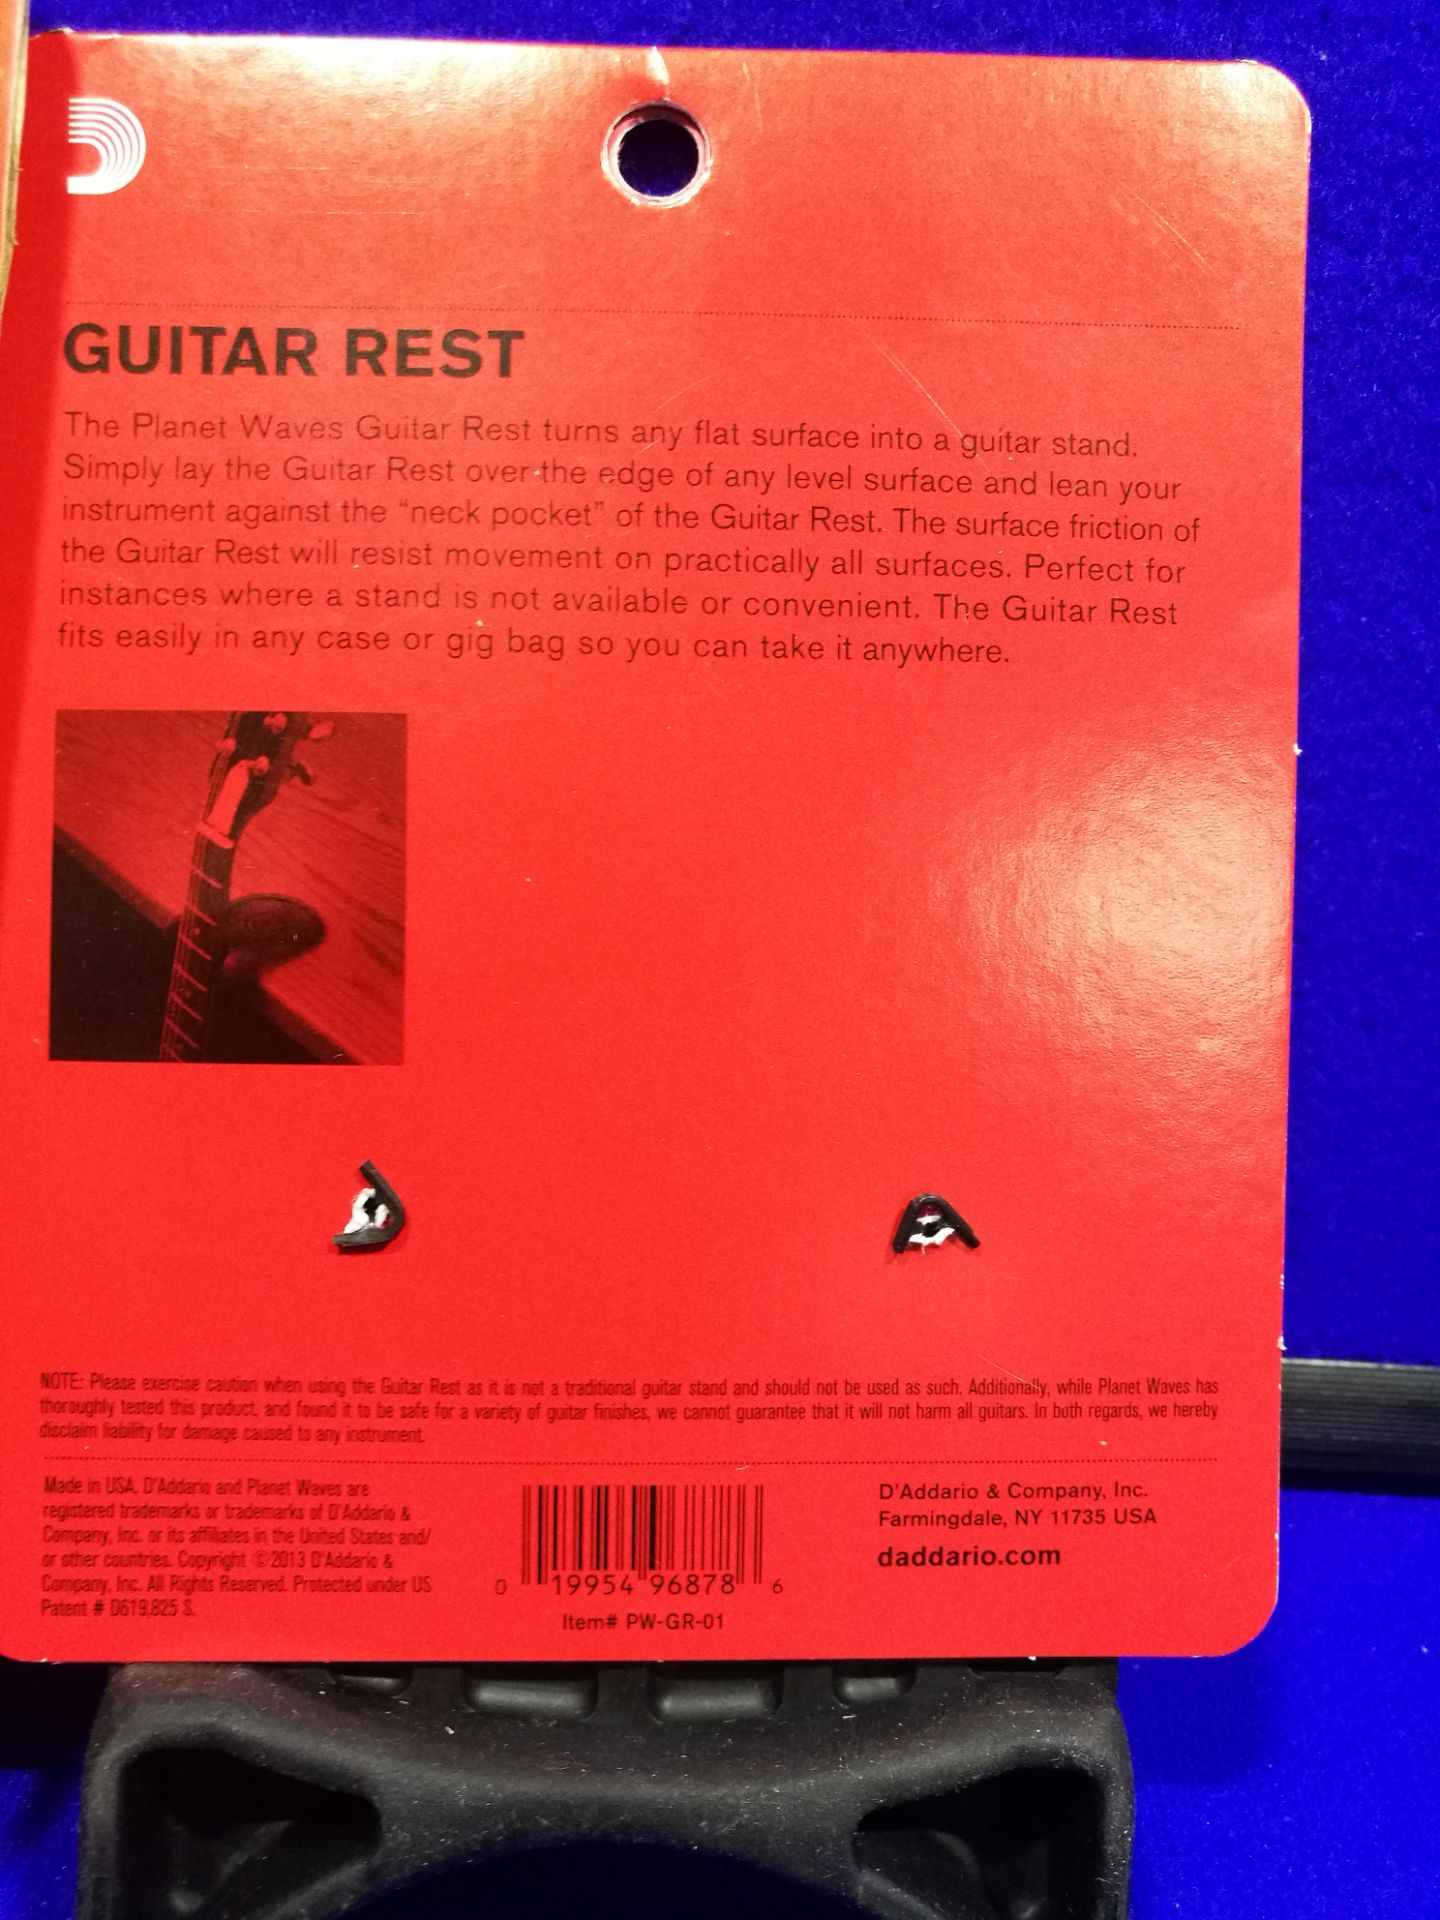 D'Addario Portable Guitar Dock & Guitar Stand - Image 3 of 3